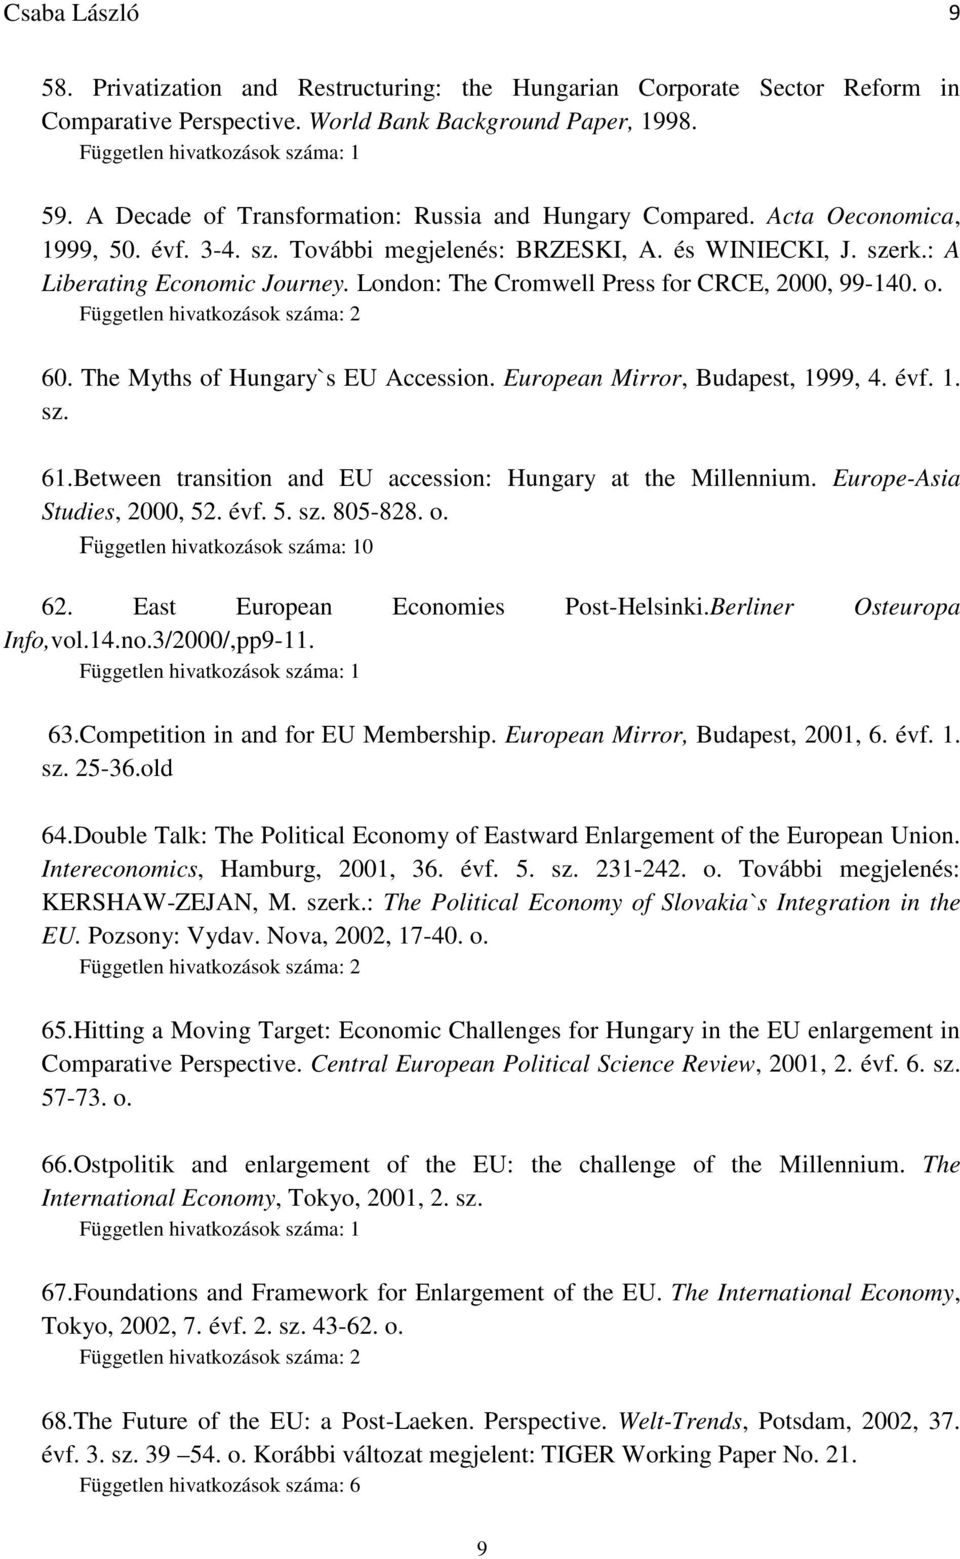 The Myths of Hungary`s EU Accession. European Mirror, Budapest, 1999, 4. évf. 1. sz. 61.Between transition and EU accession: Hungary at the Millennium. Europe-Asia Studies, 2000, 52. évf. 5. sz. 805-828.